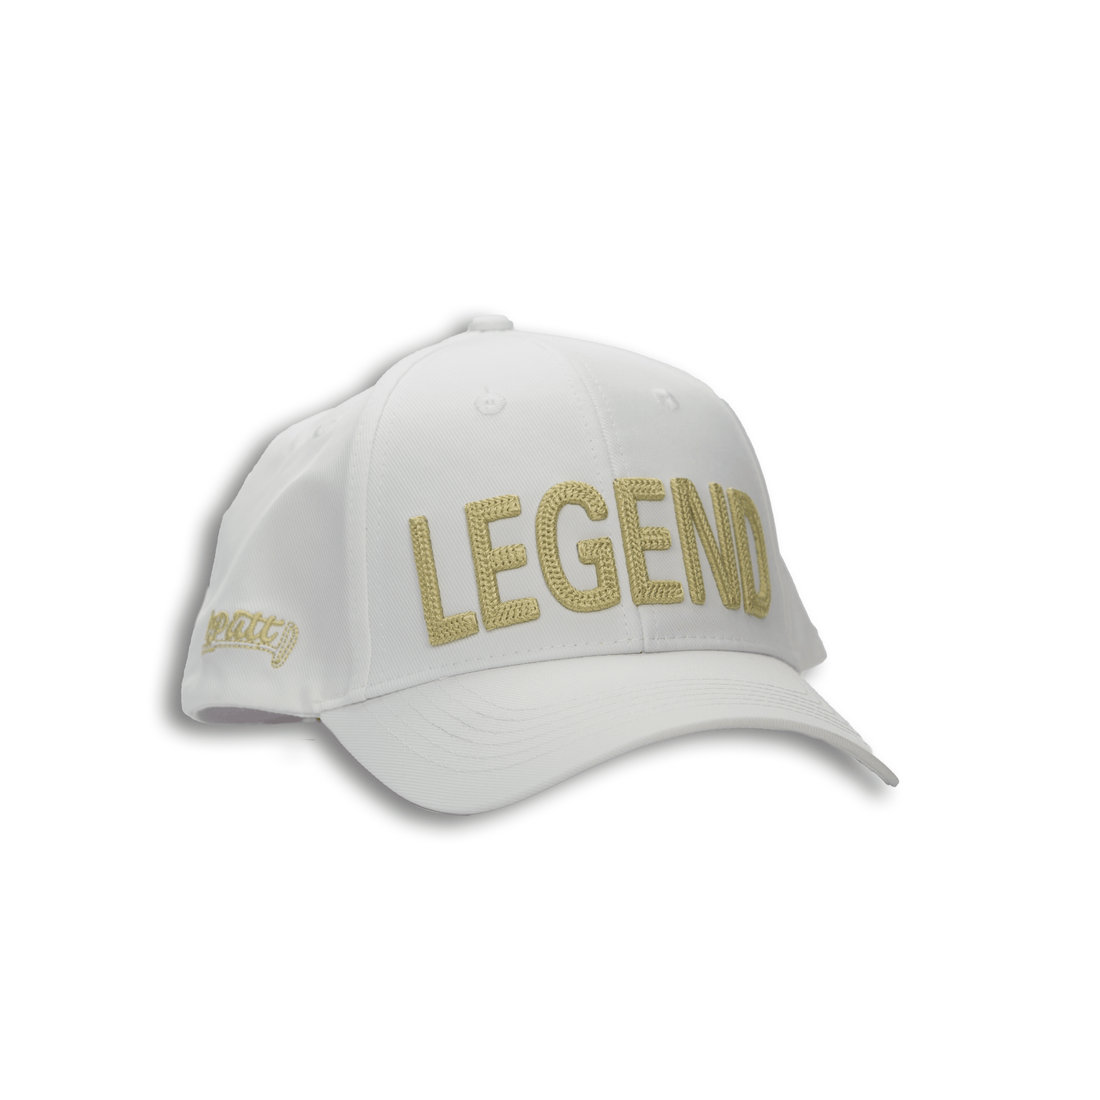 LEGEND Hat - 2putt